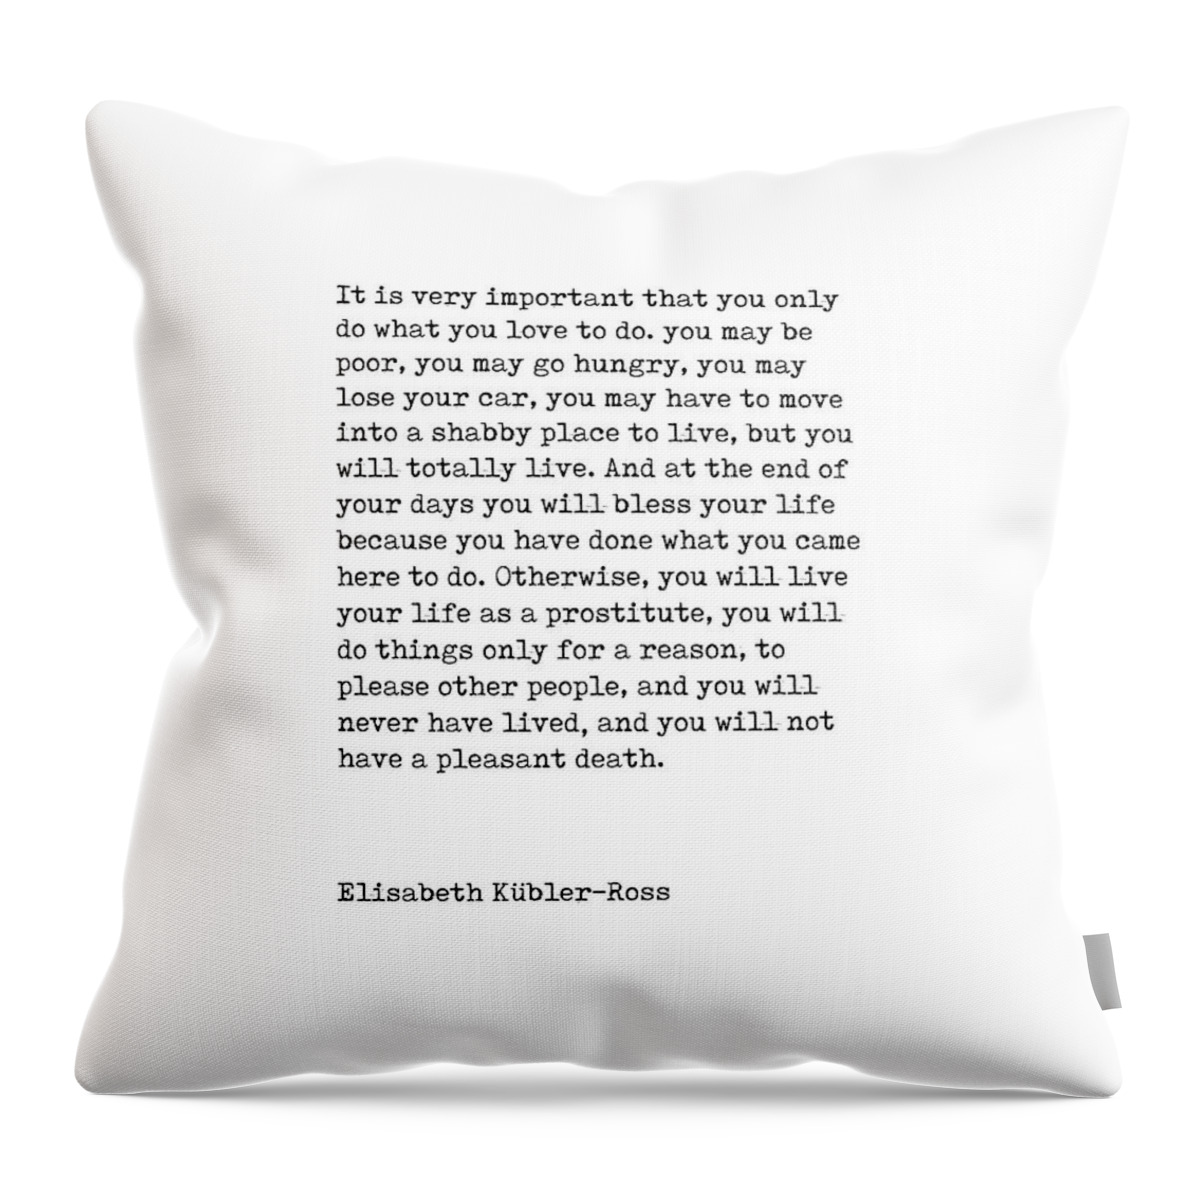 Elisabeth Kubler-ross Throw Pillow featuring the digital art Do what you love to do - Elisabeth Kubler-Ross Quote - Minimal, Typewriter Print - Inspiring Quote by Studio Grafiikka